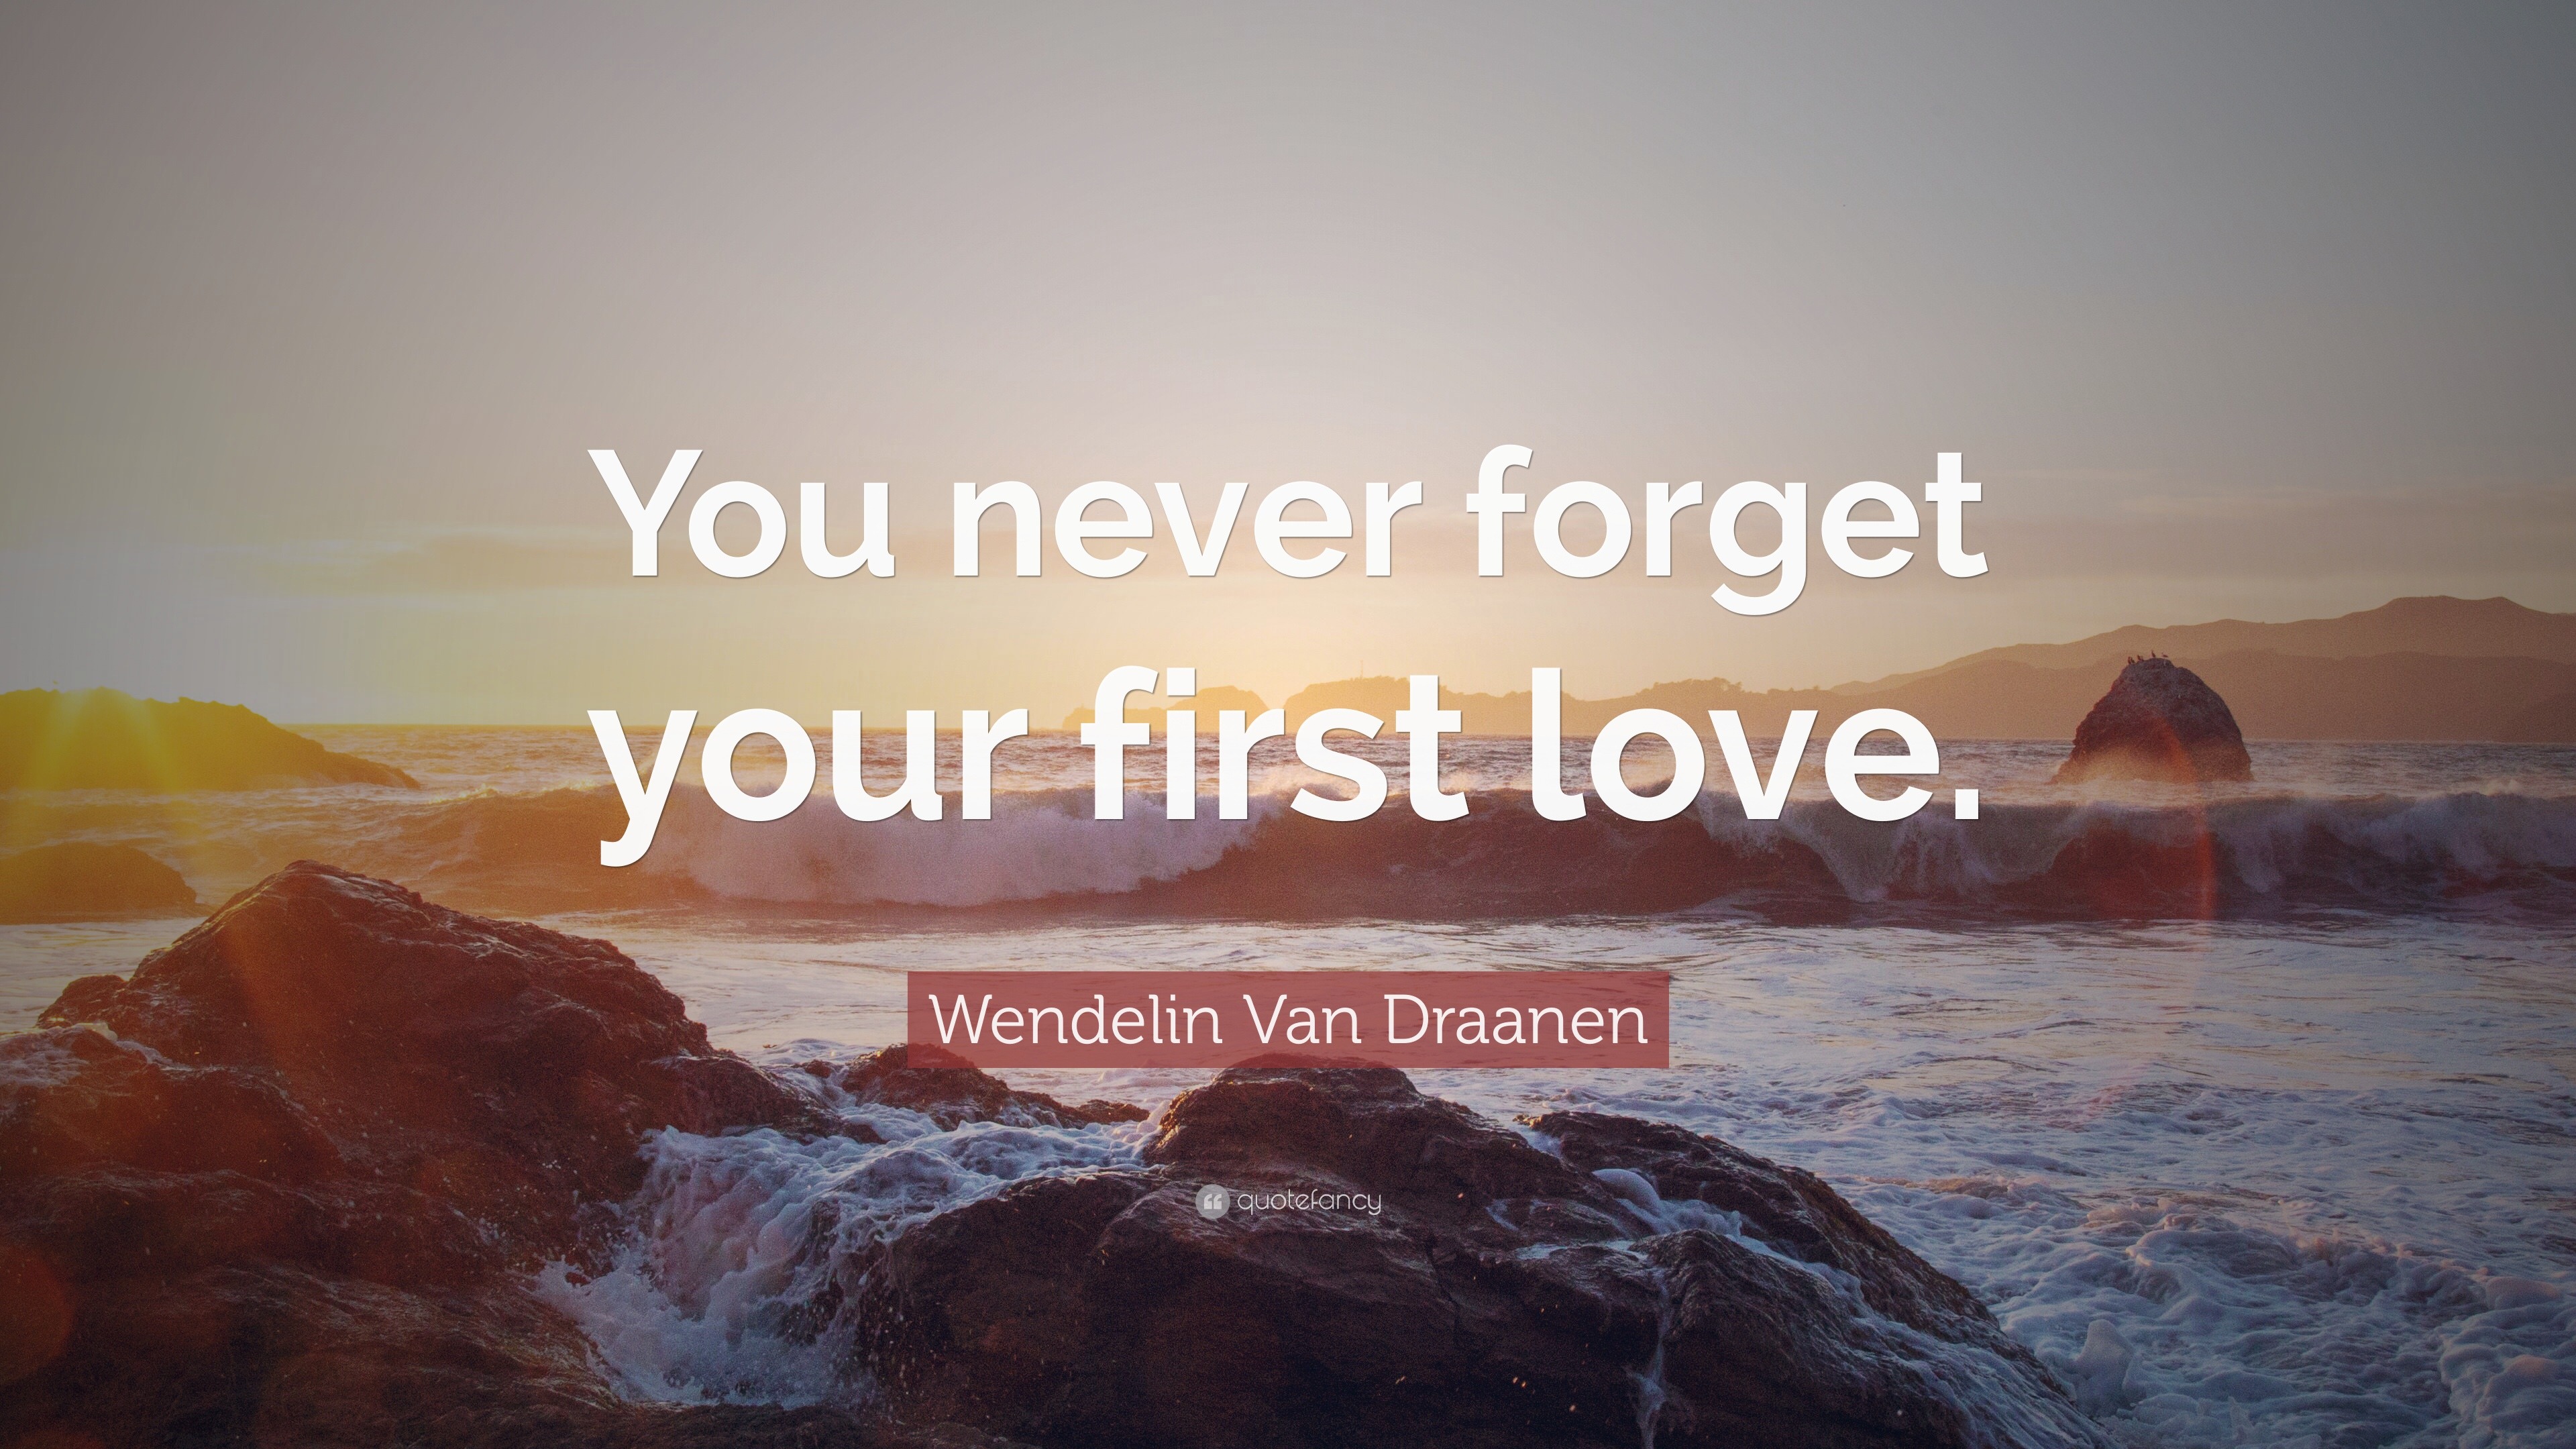 Wendelin Van Draanen Quote “You never for your first love ”